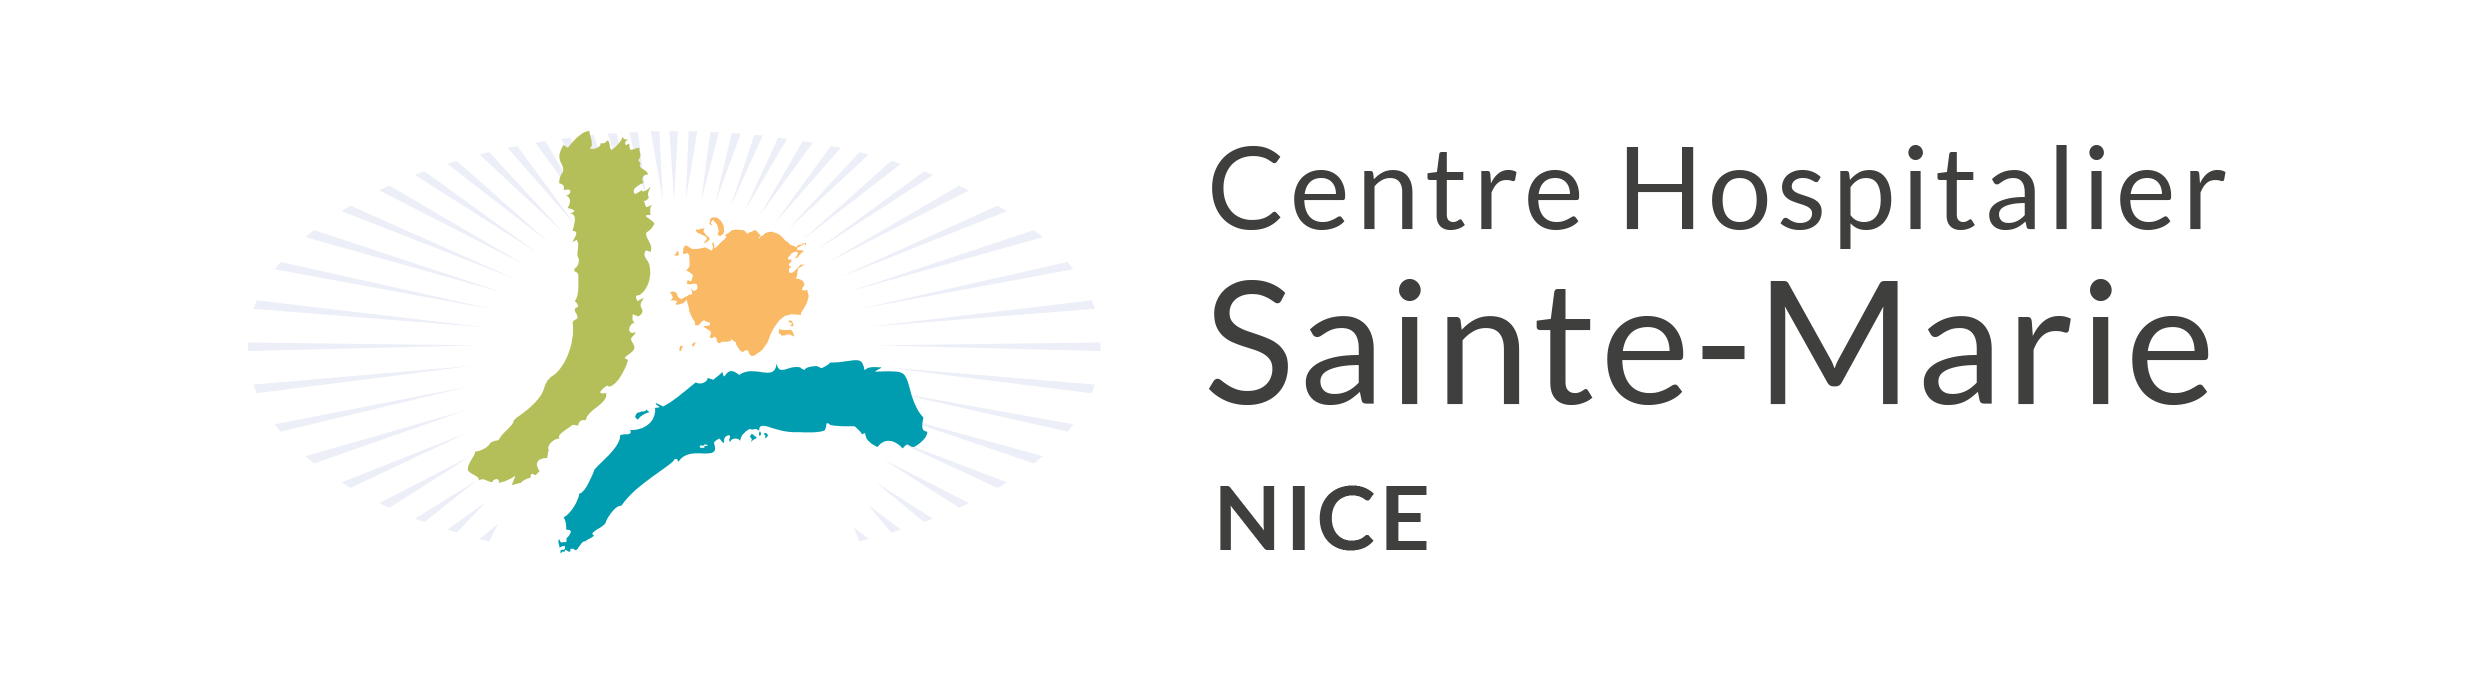 Centre Hospitalier Sainte-Marie Nice